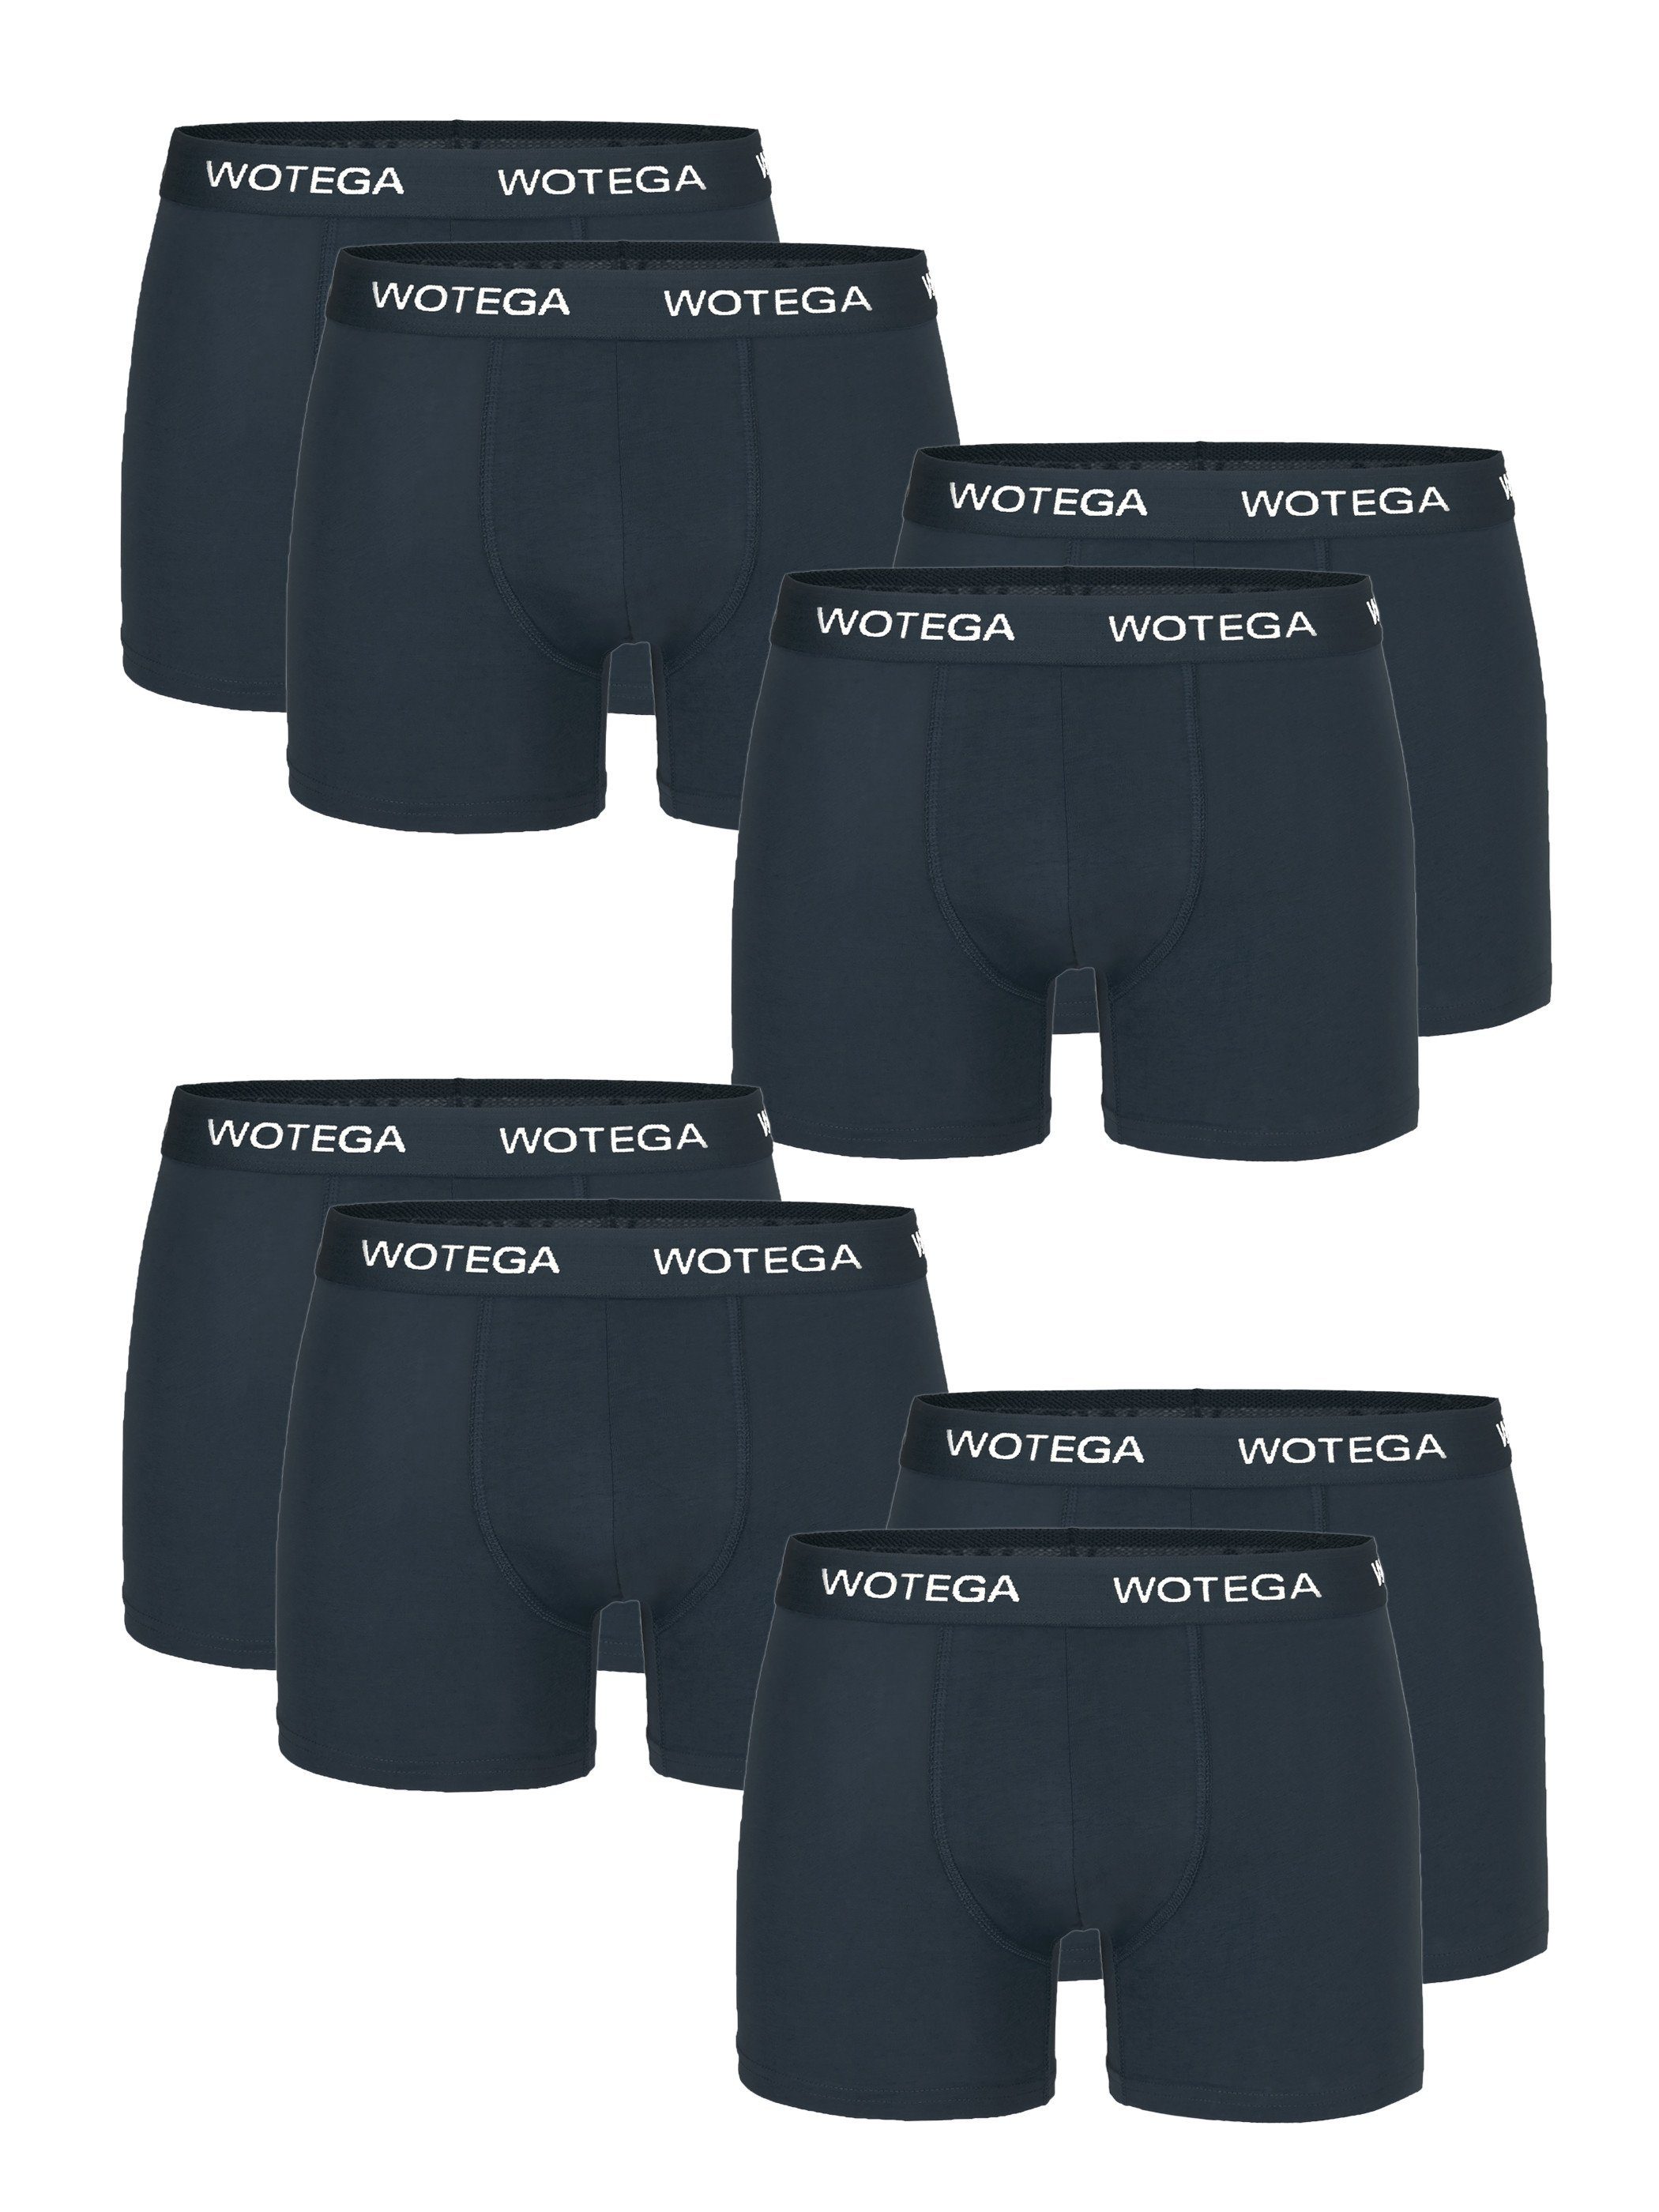 WOTEGA Boxershorts Joe (Spar-Set, 8er-Pack) moderne Baumwoll Unterhosen exklusiv im 8er Pack Grau (Castlerock 180201)